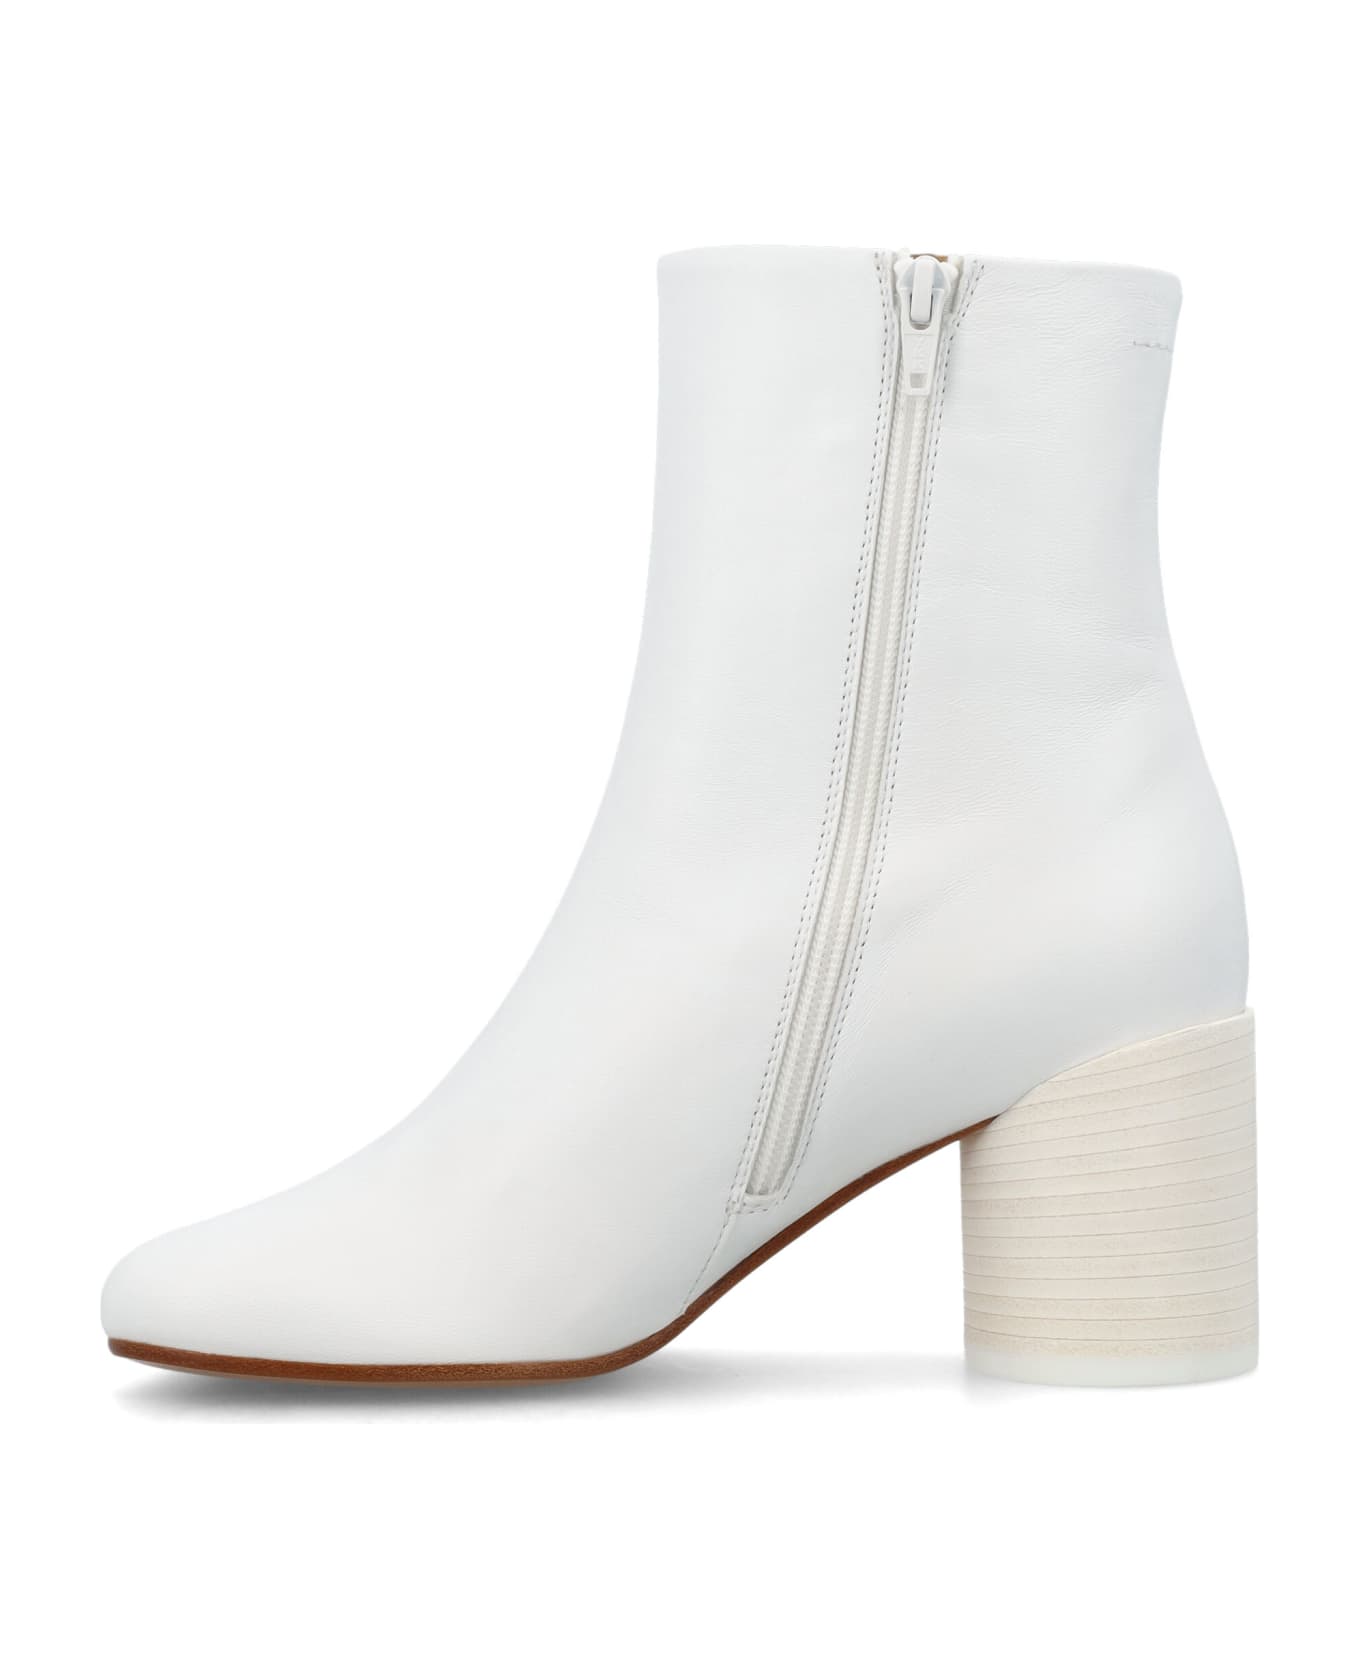 MM6 Maison Margiela Anatomic Ankle Boots - Bright White